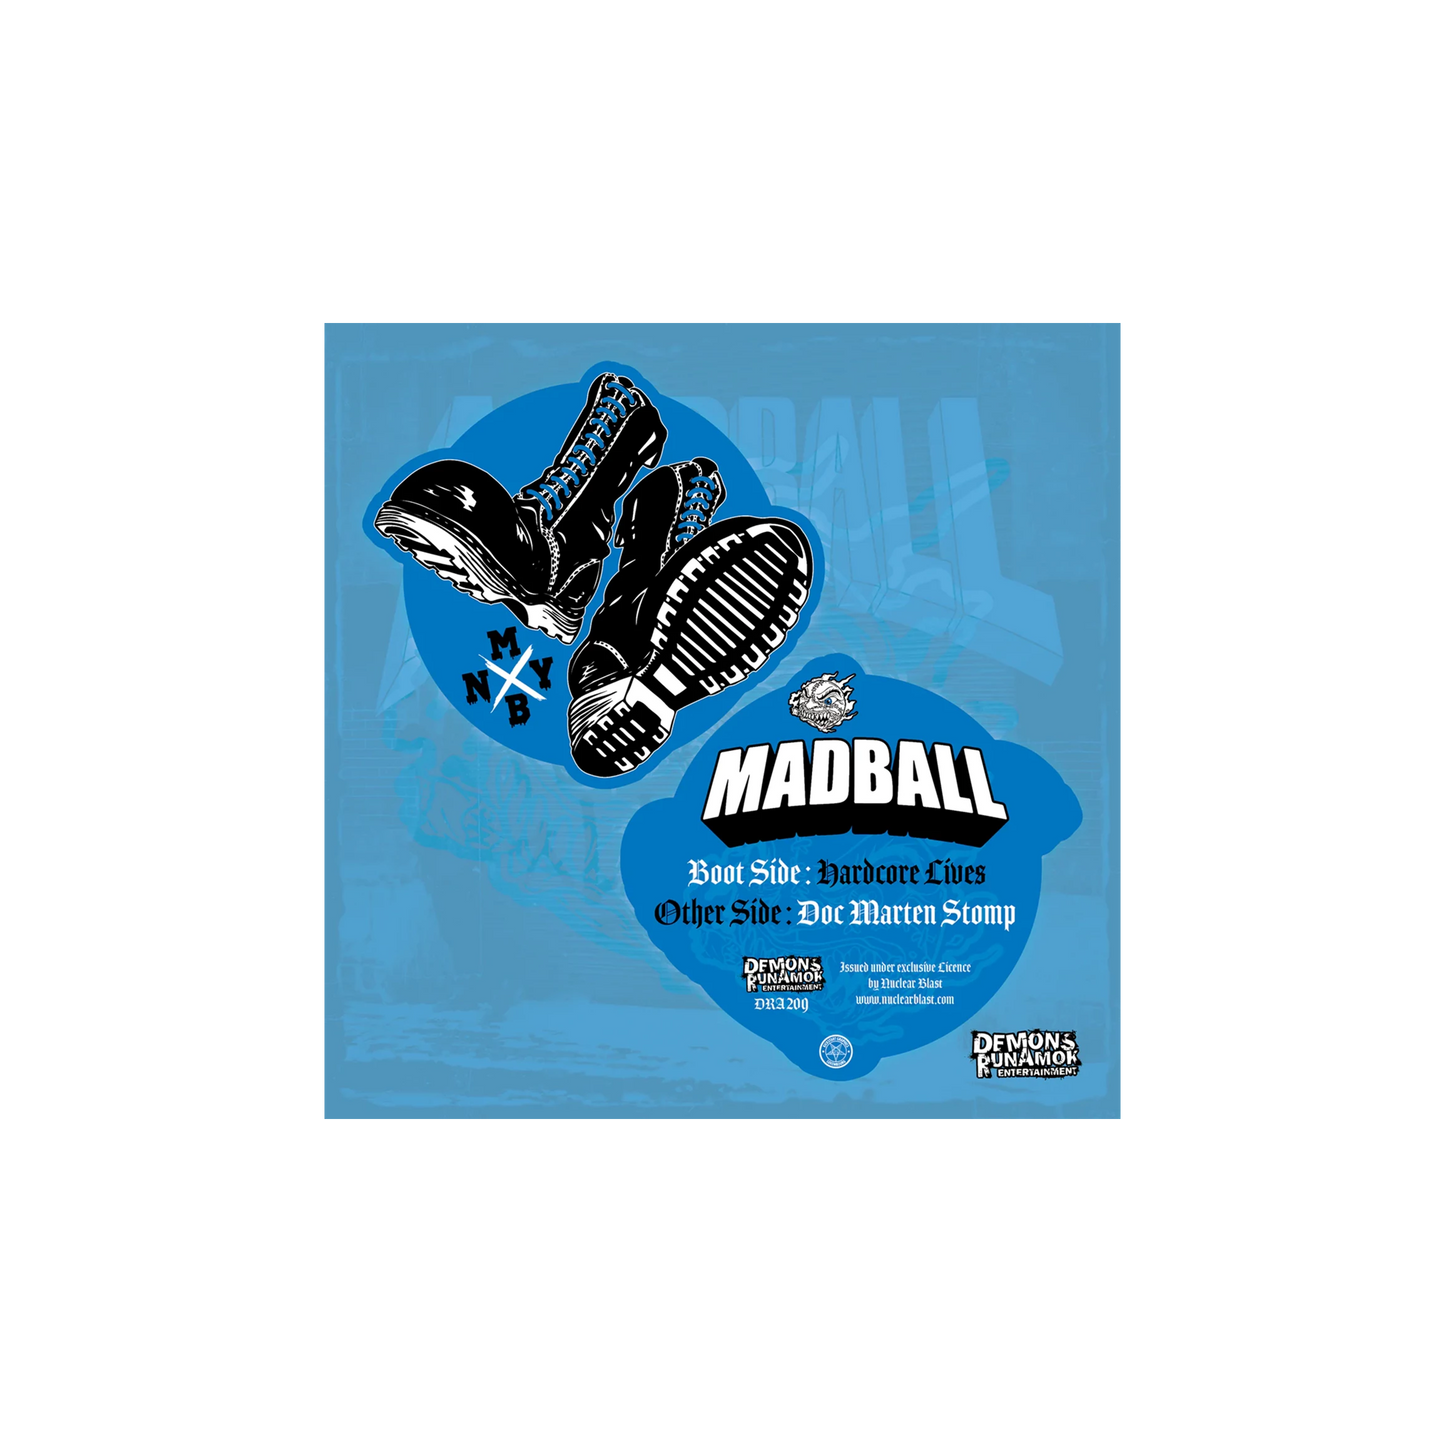 Madball "Hardcore Lives/Doc Marten Stomp" EP